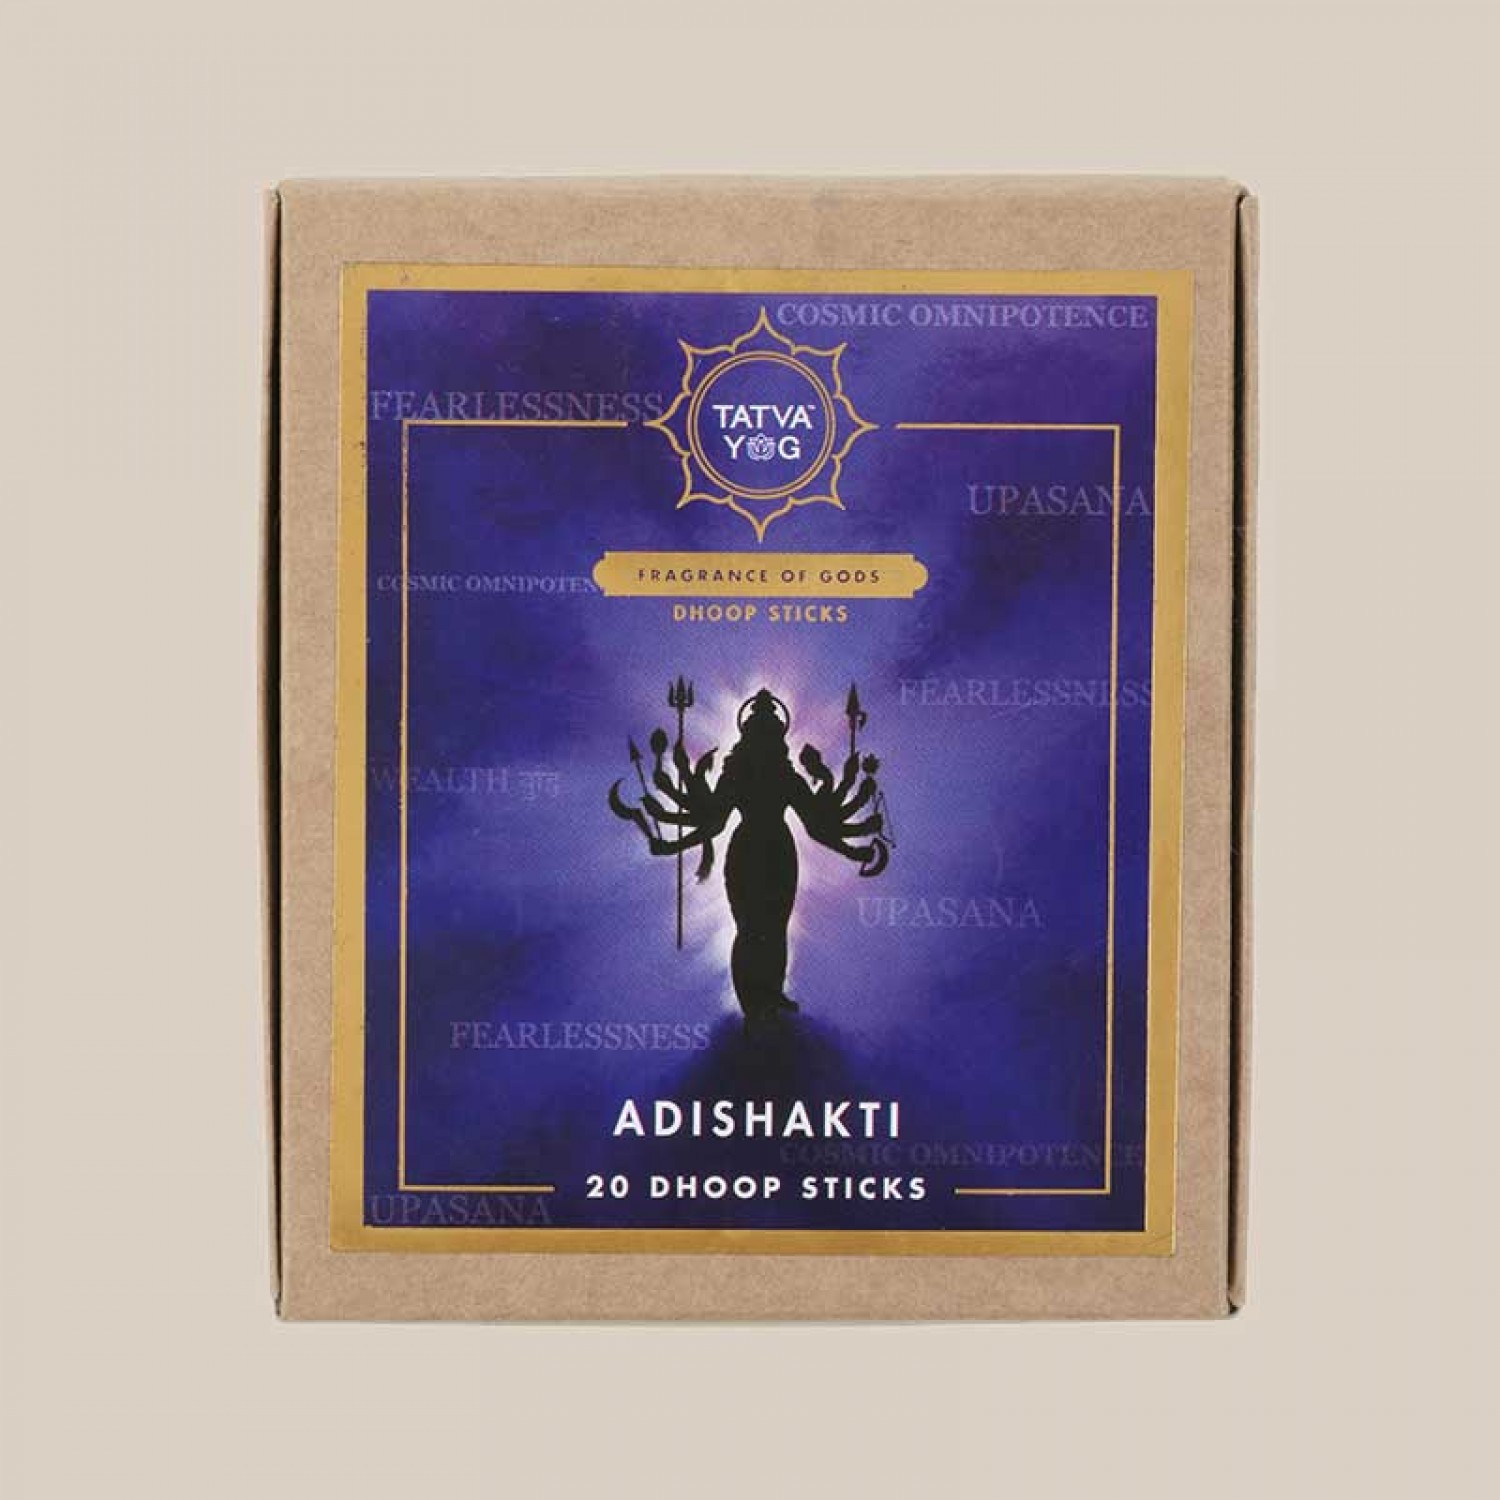 adishakti-dhoop-stick-fragrance-of-gods-dhoop-sticks